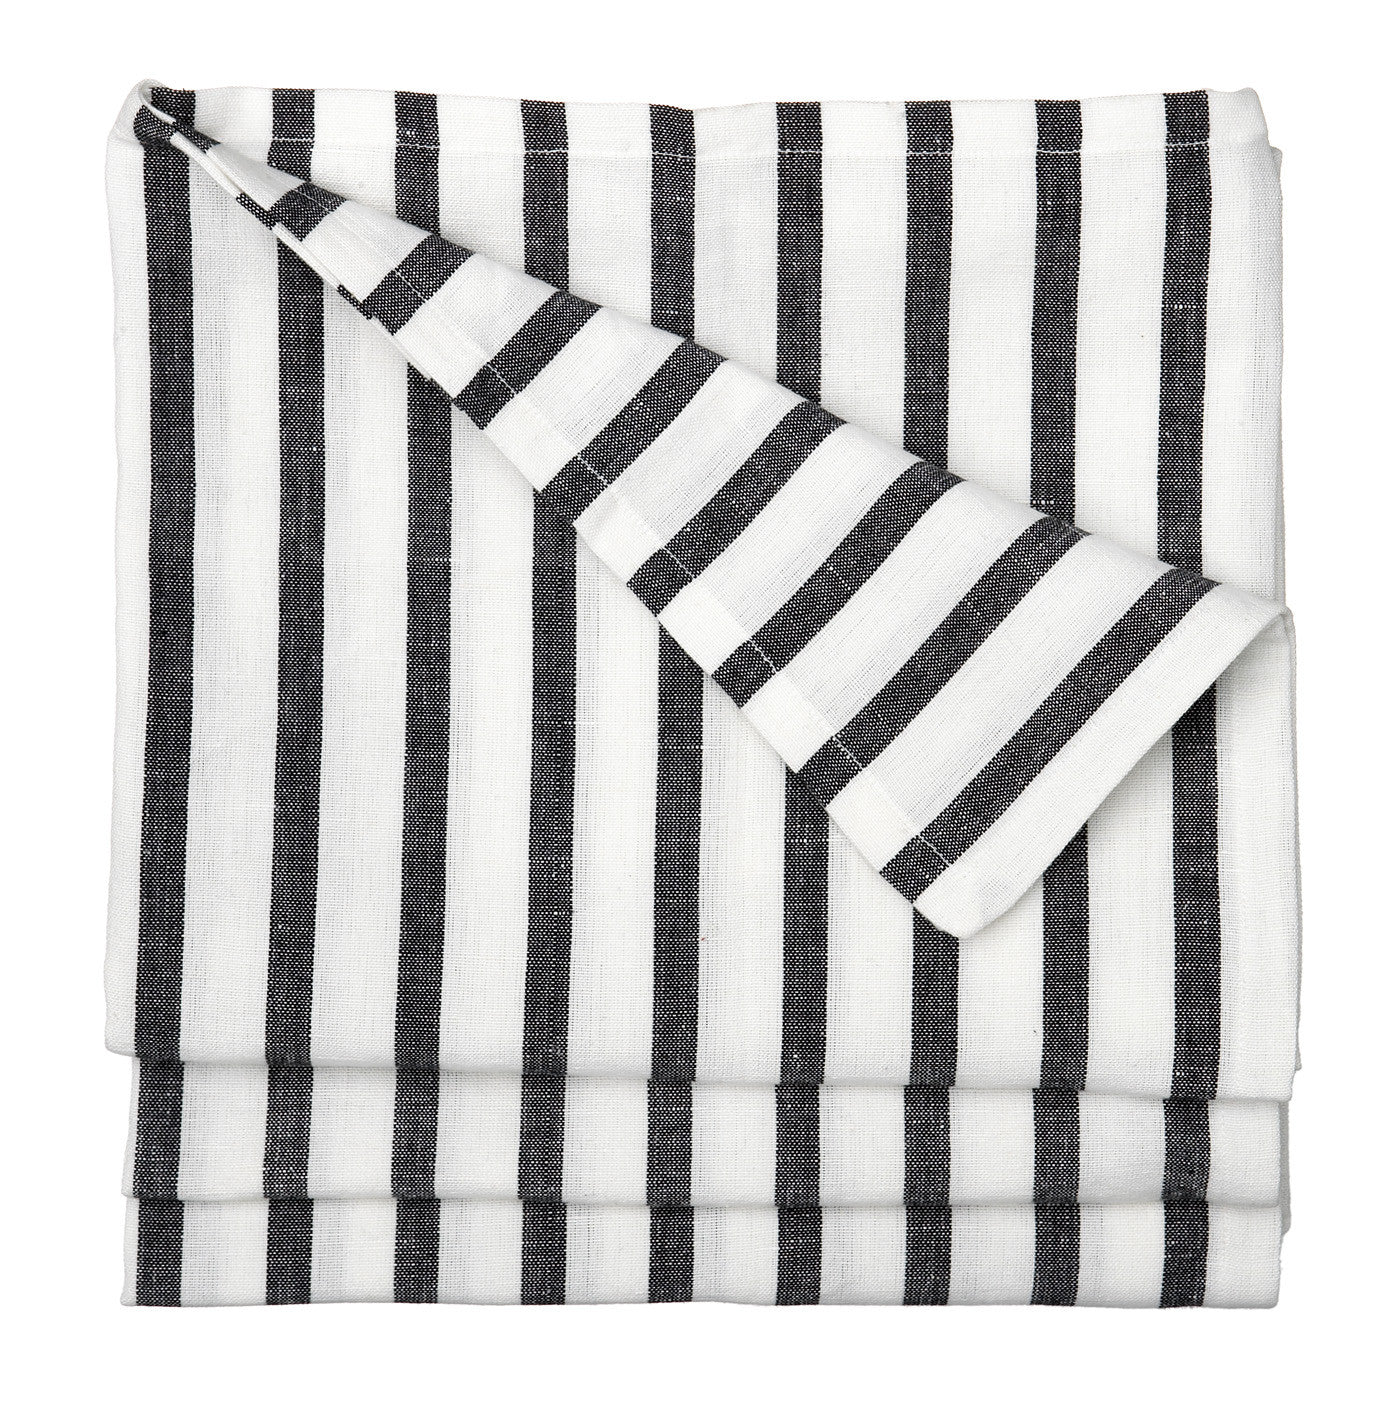 Monochrome Patterned & Striped Tablecloths & Napkins ...